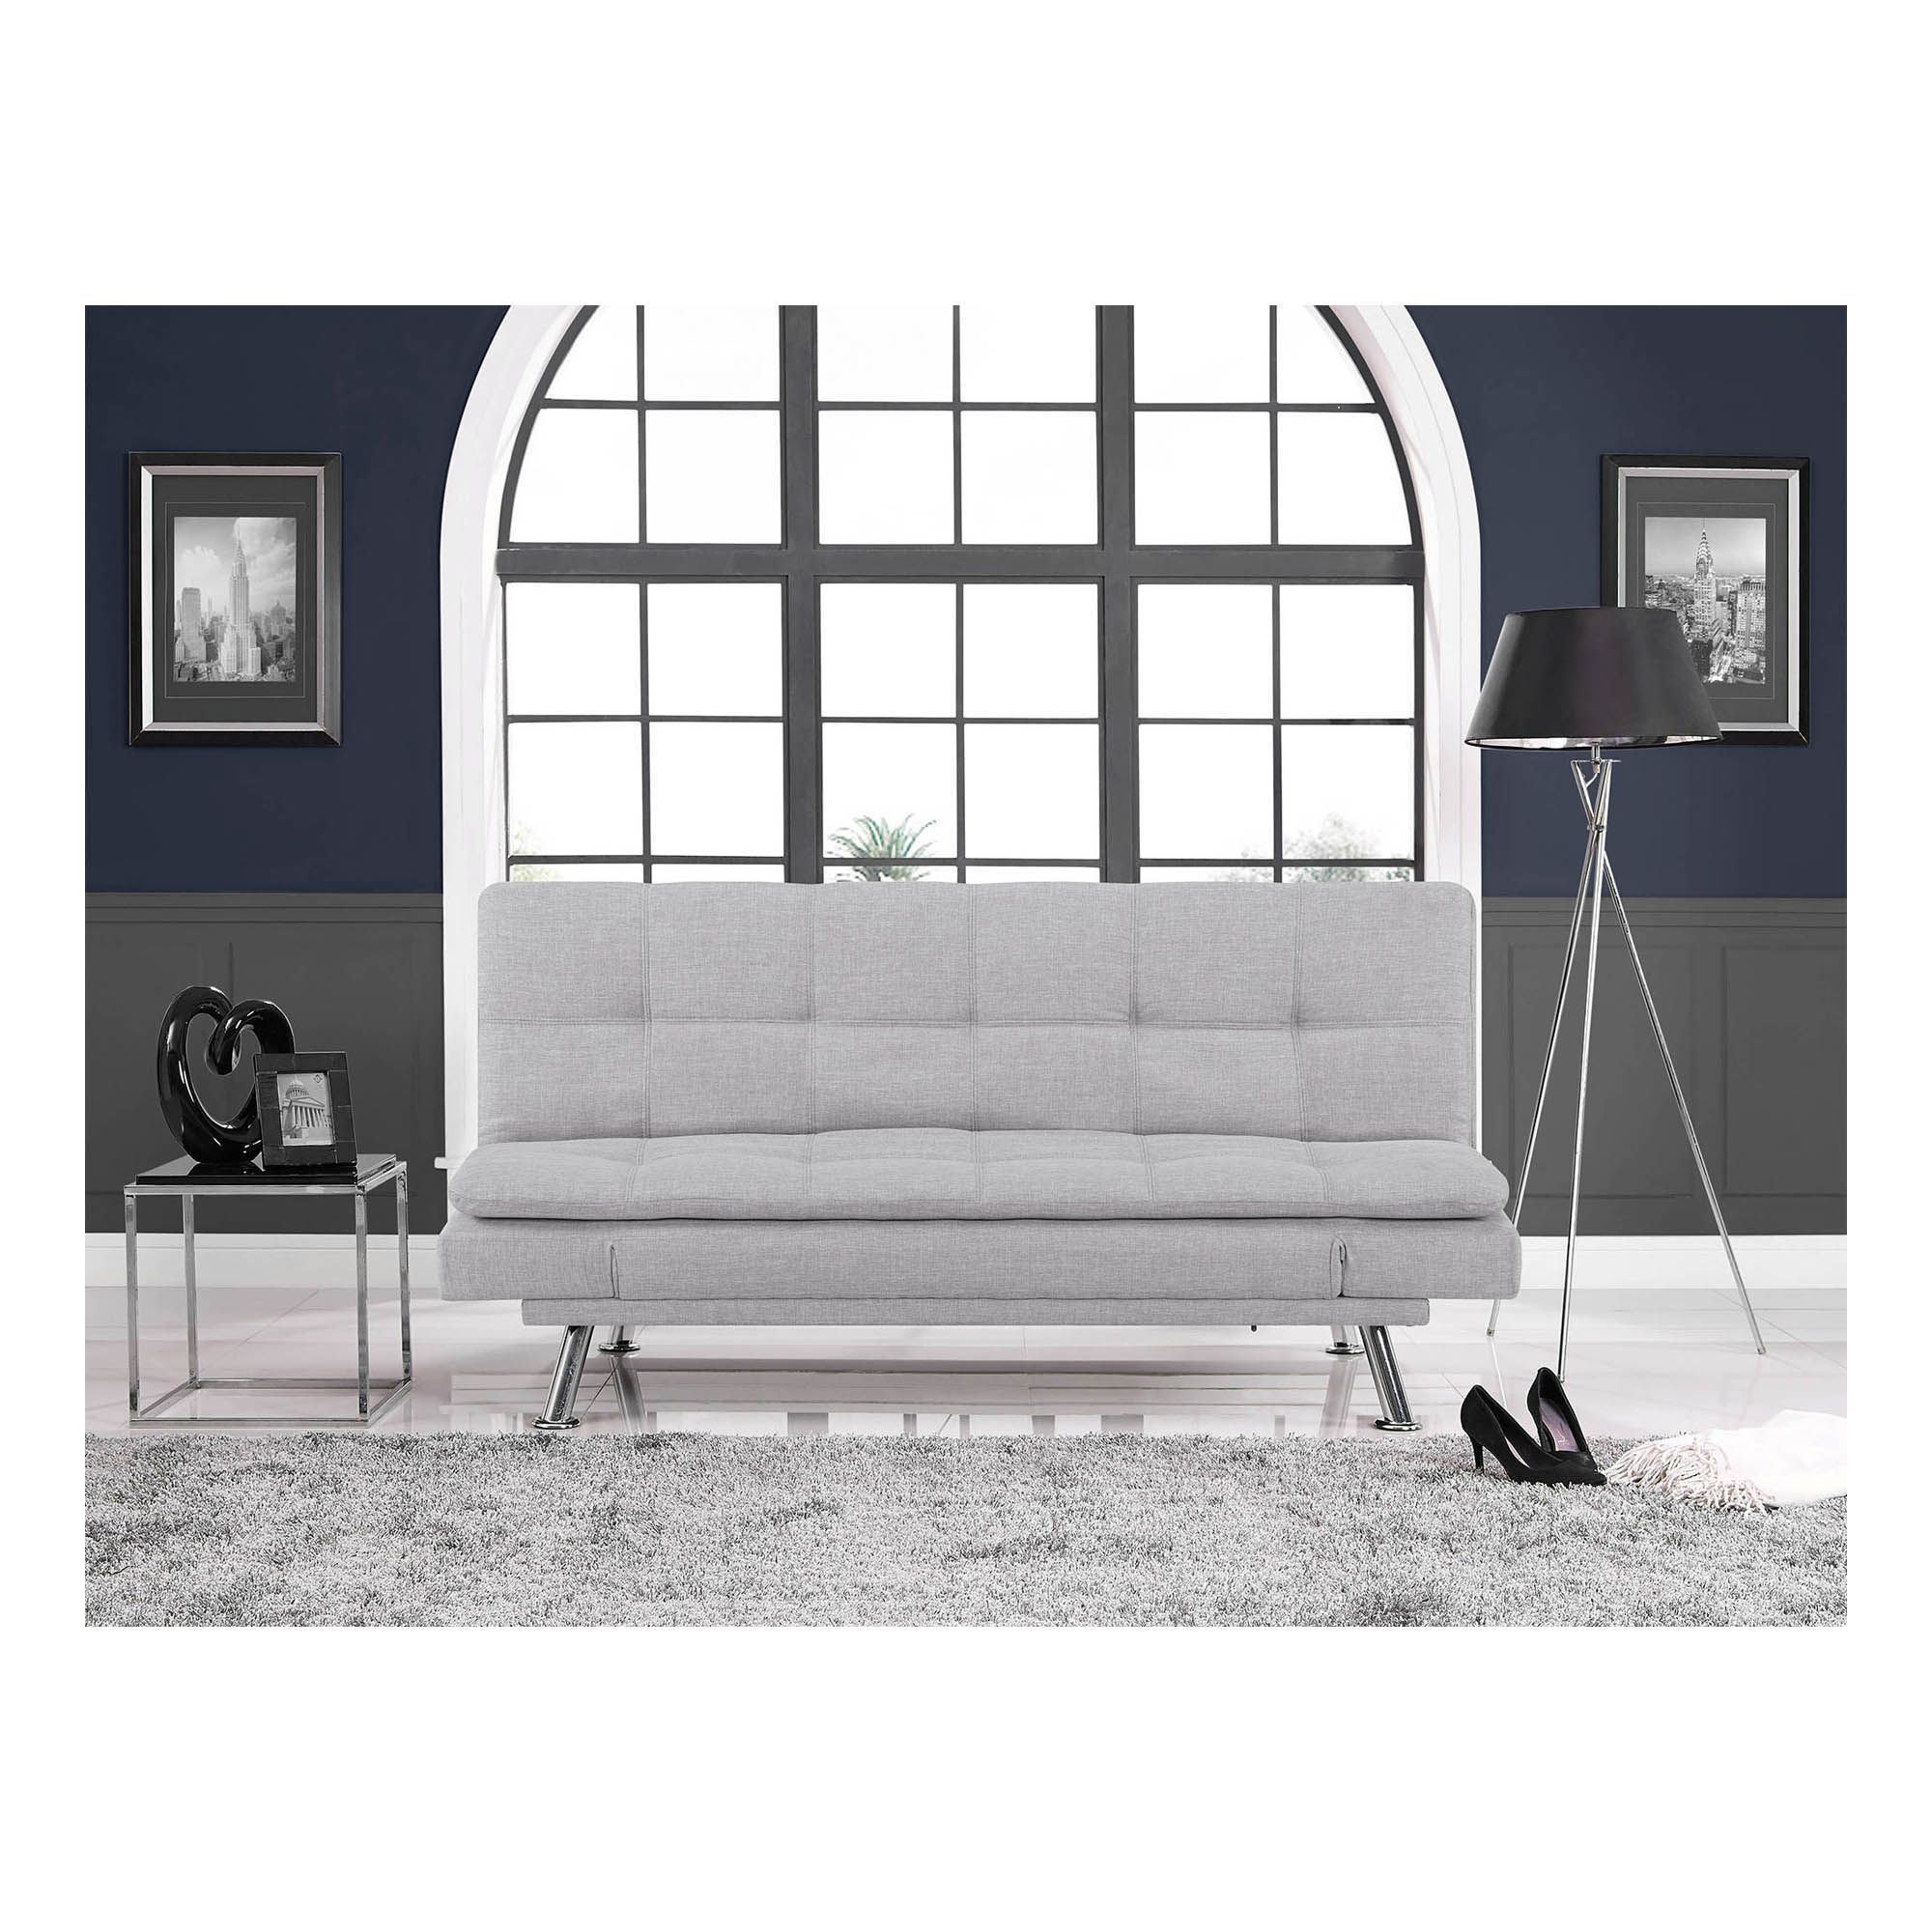 Serta Lifestyle Solutions Niles Eurolounger Convertible Sofa - Light Grey